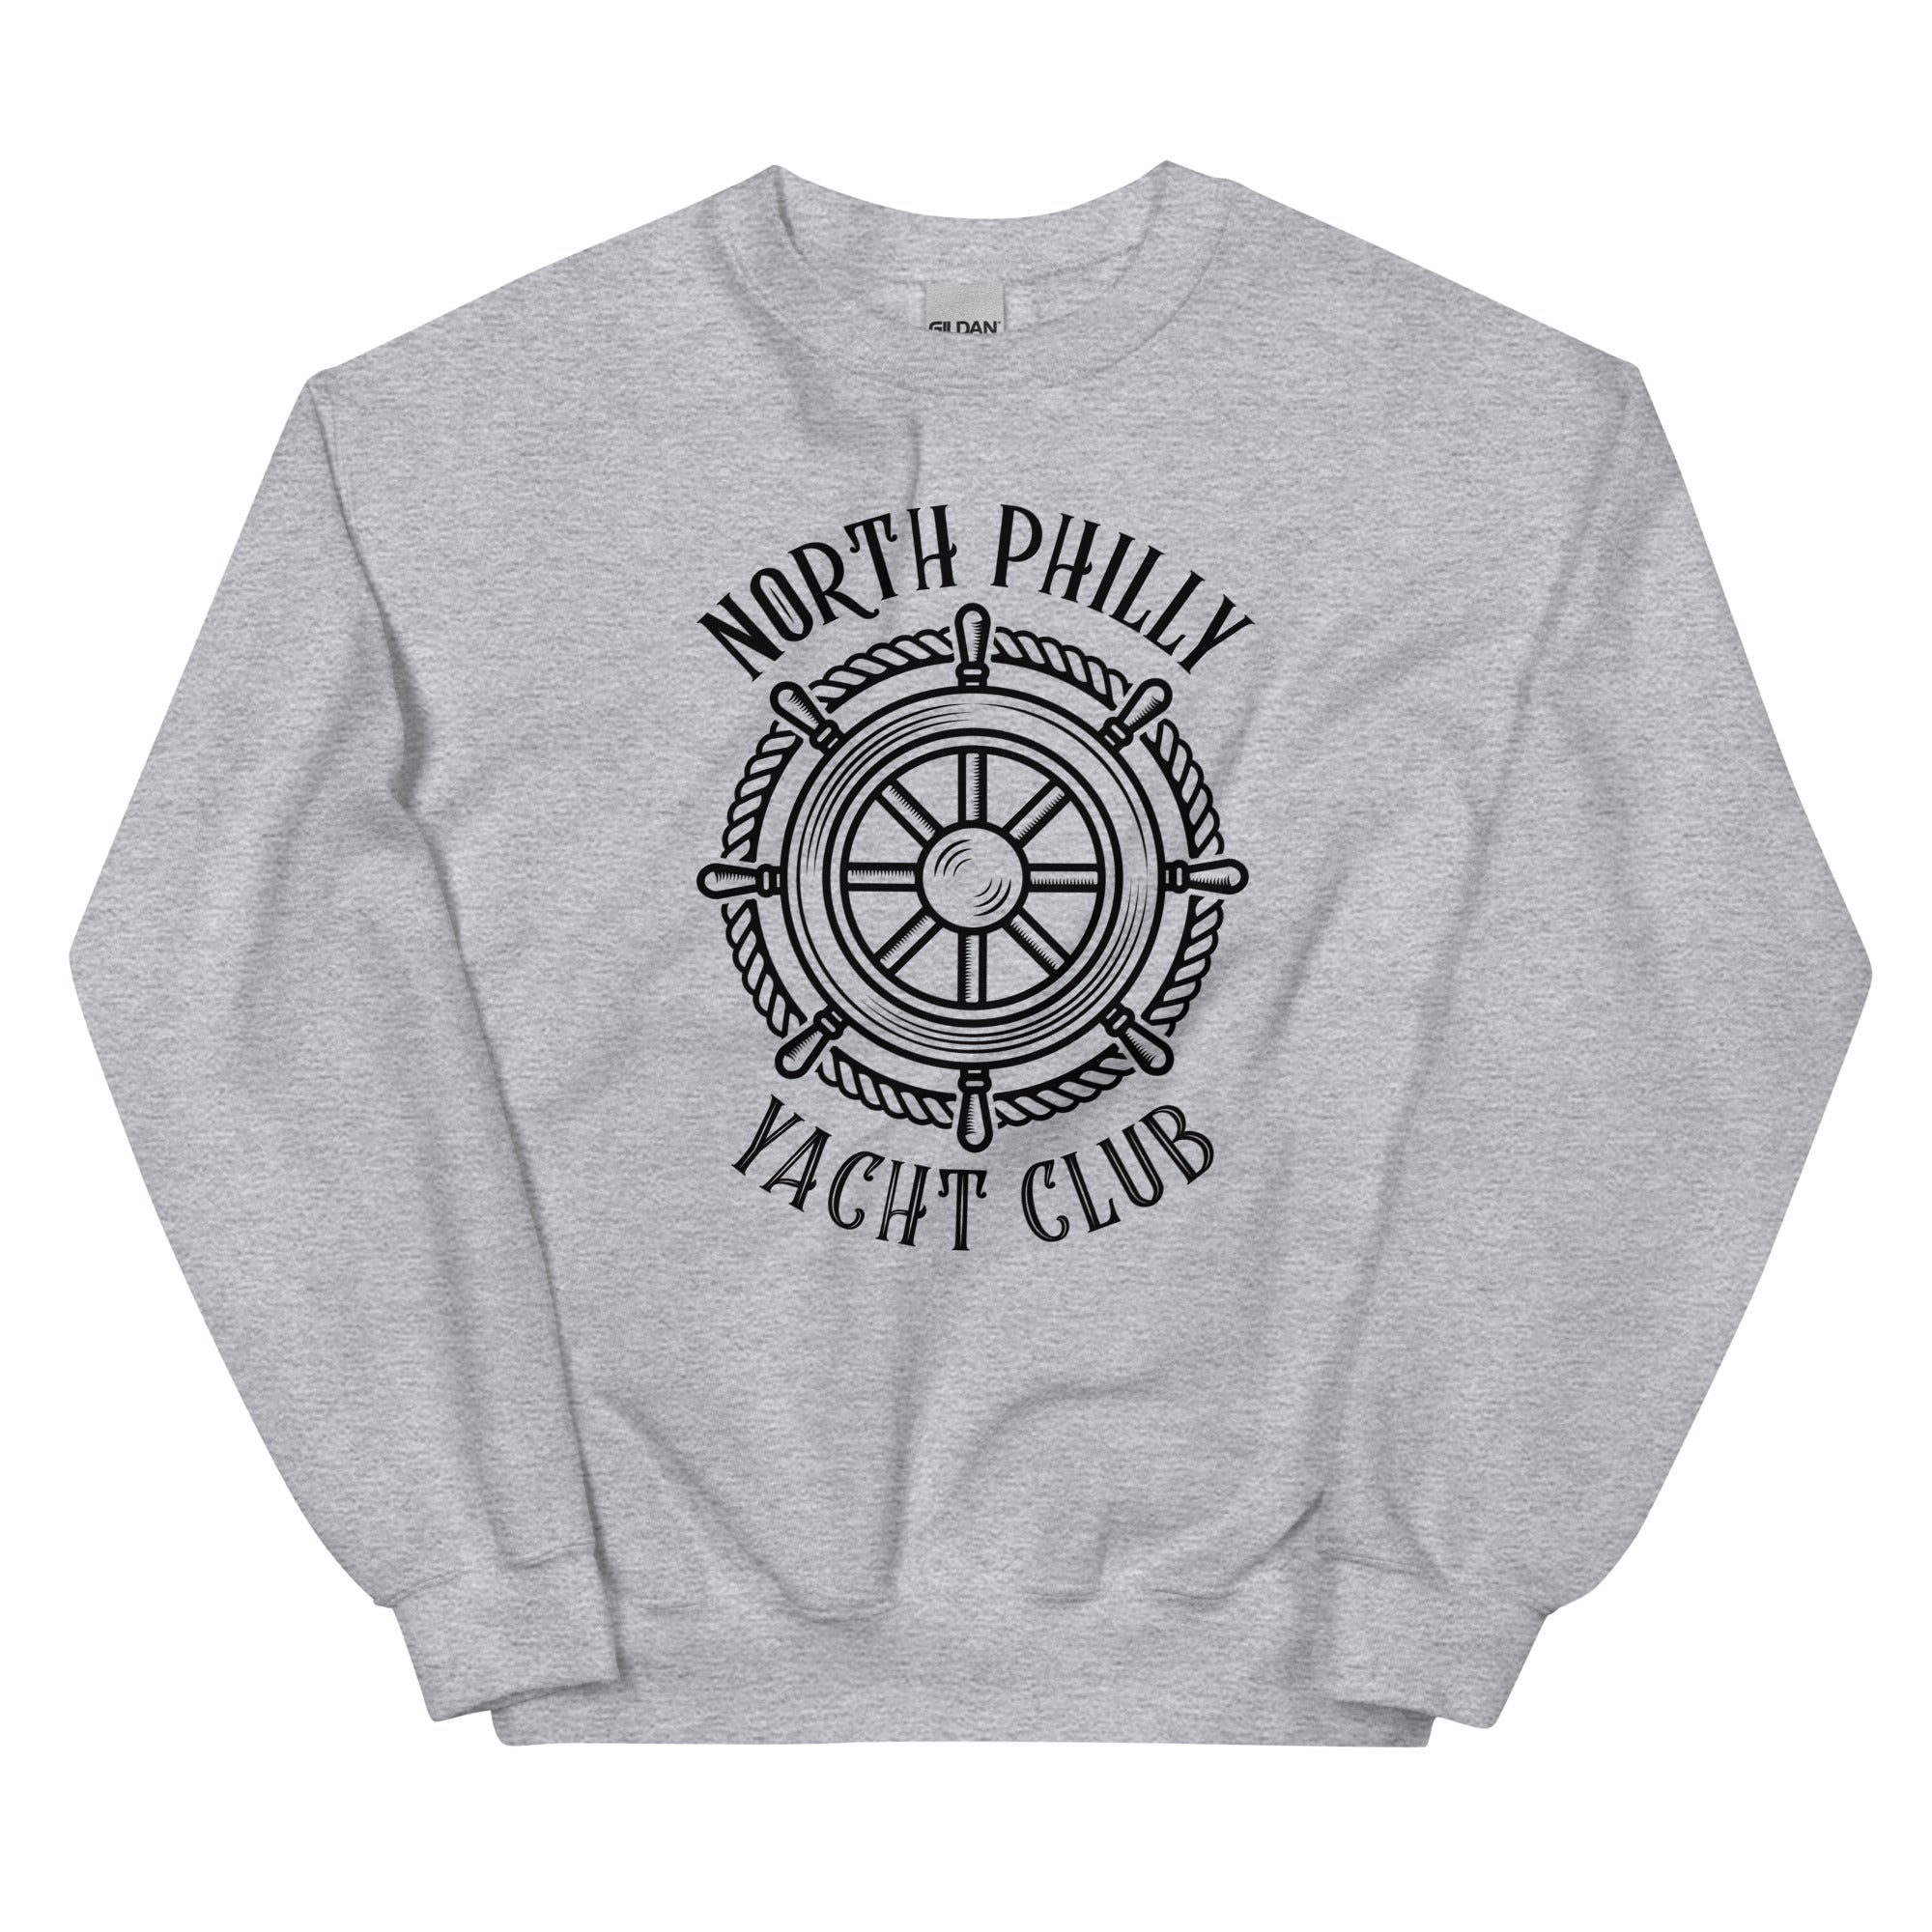 North Philly Philadelphia yacht club sport grey sweatshirt Phillygoat